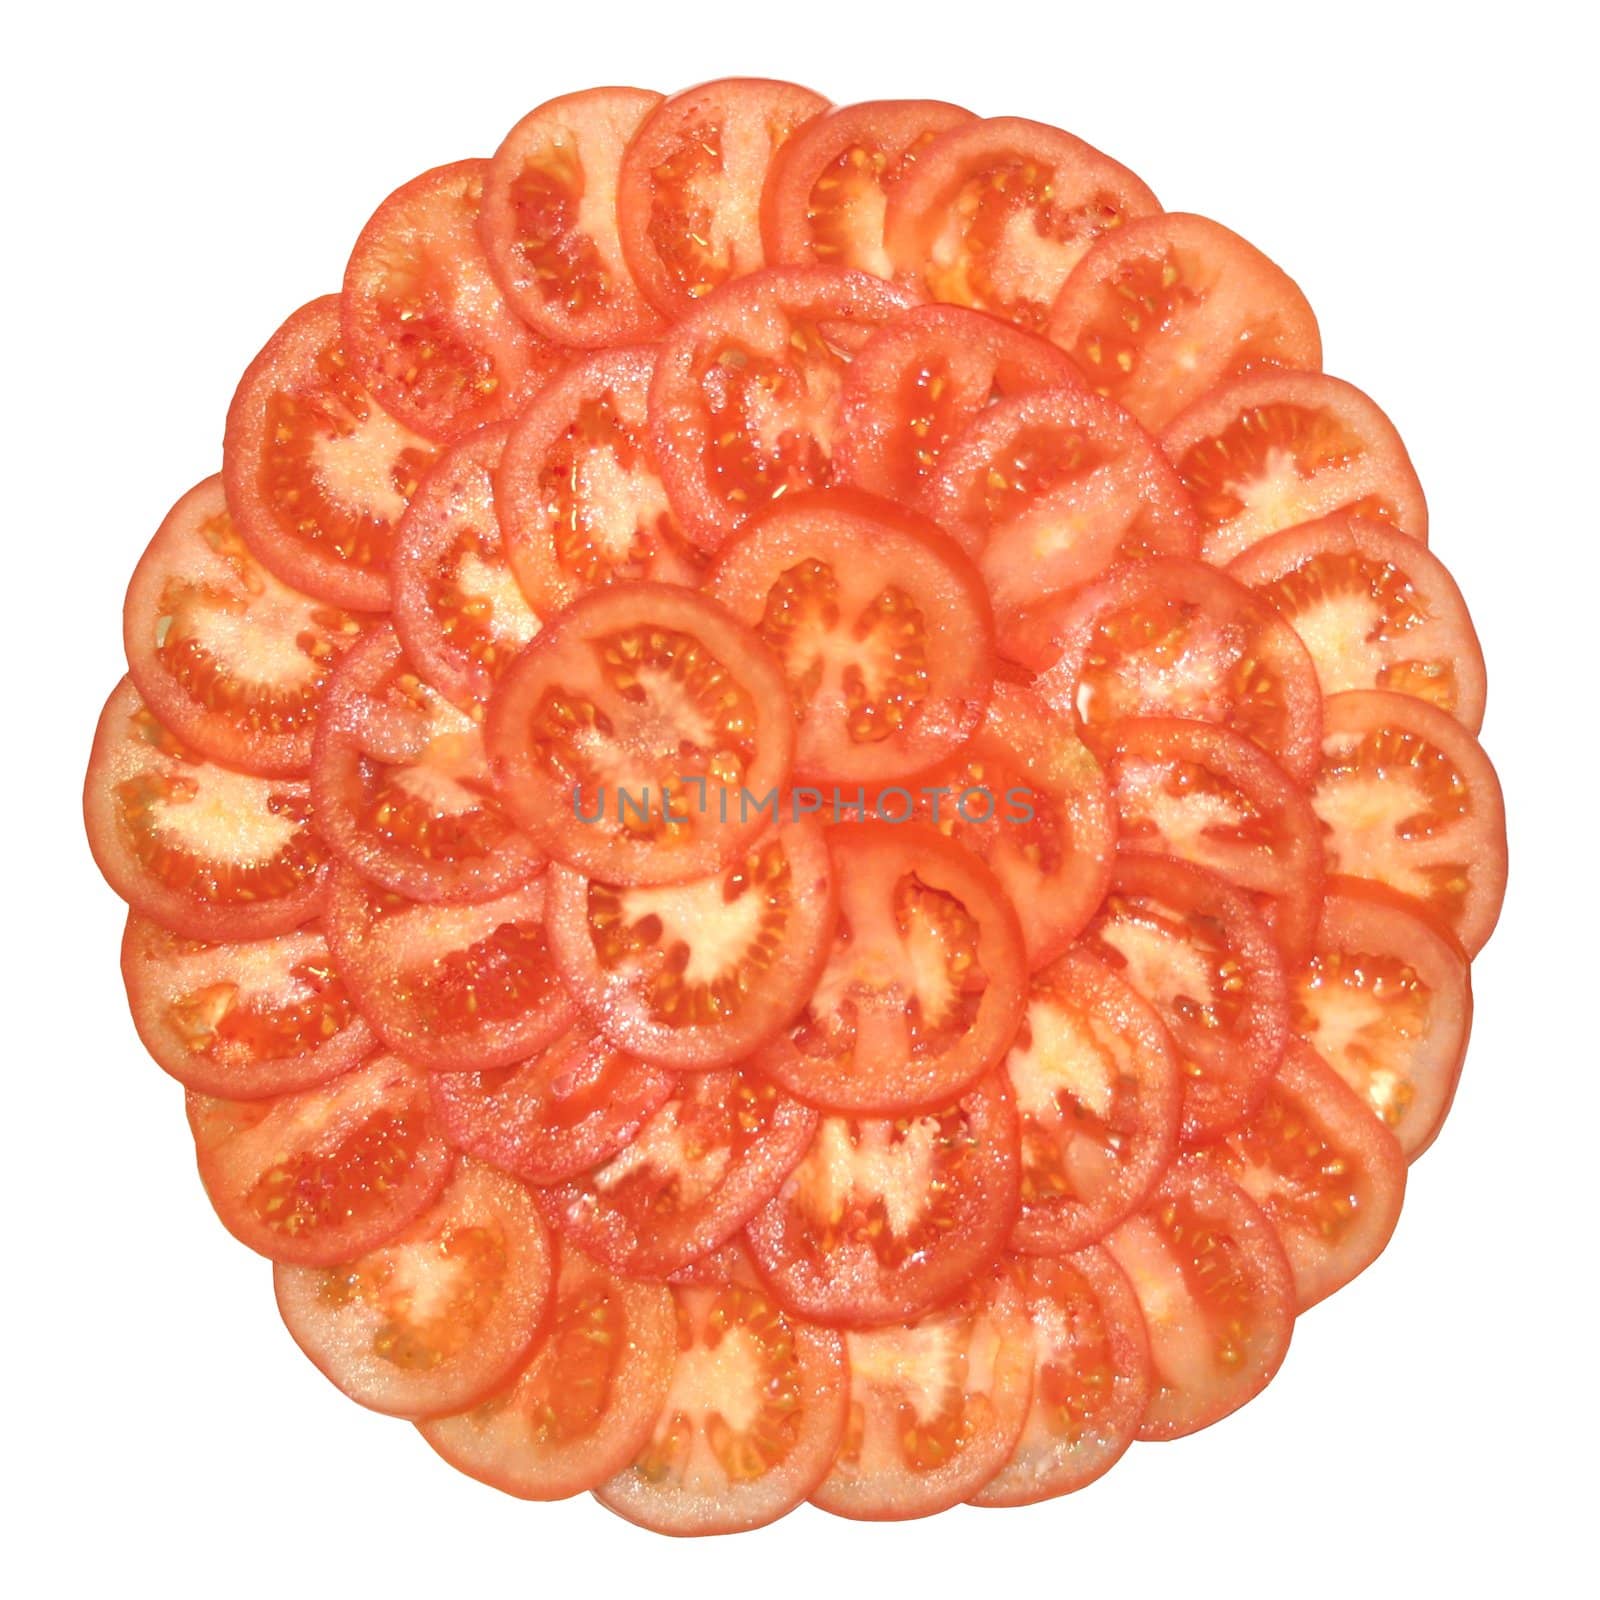 Tomatoes, red circles by AlexandrePavlov